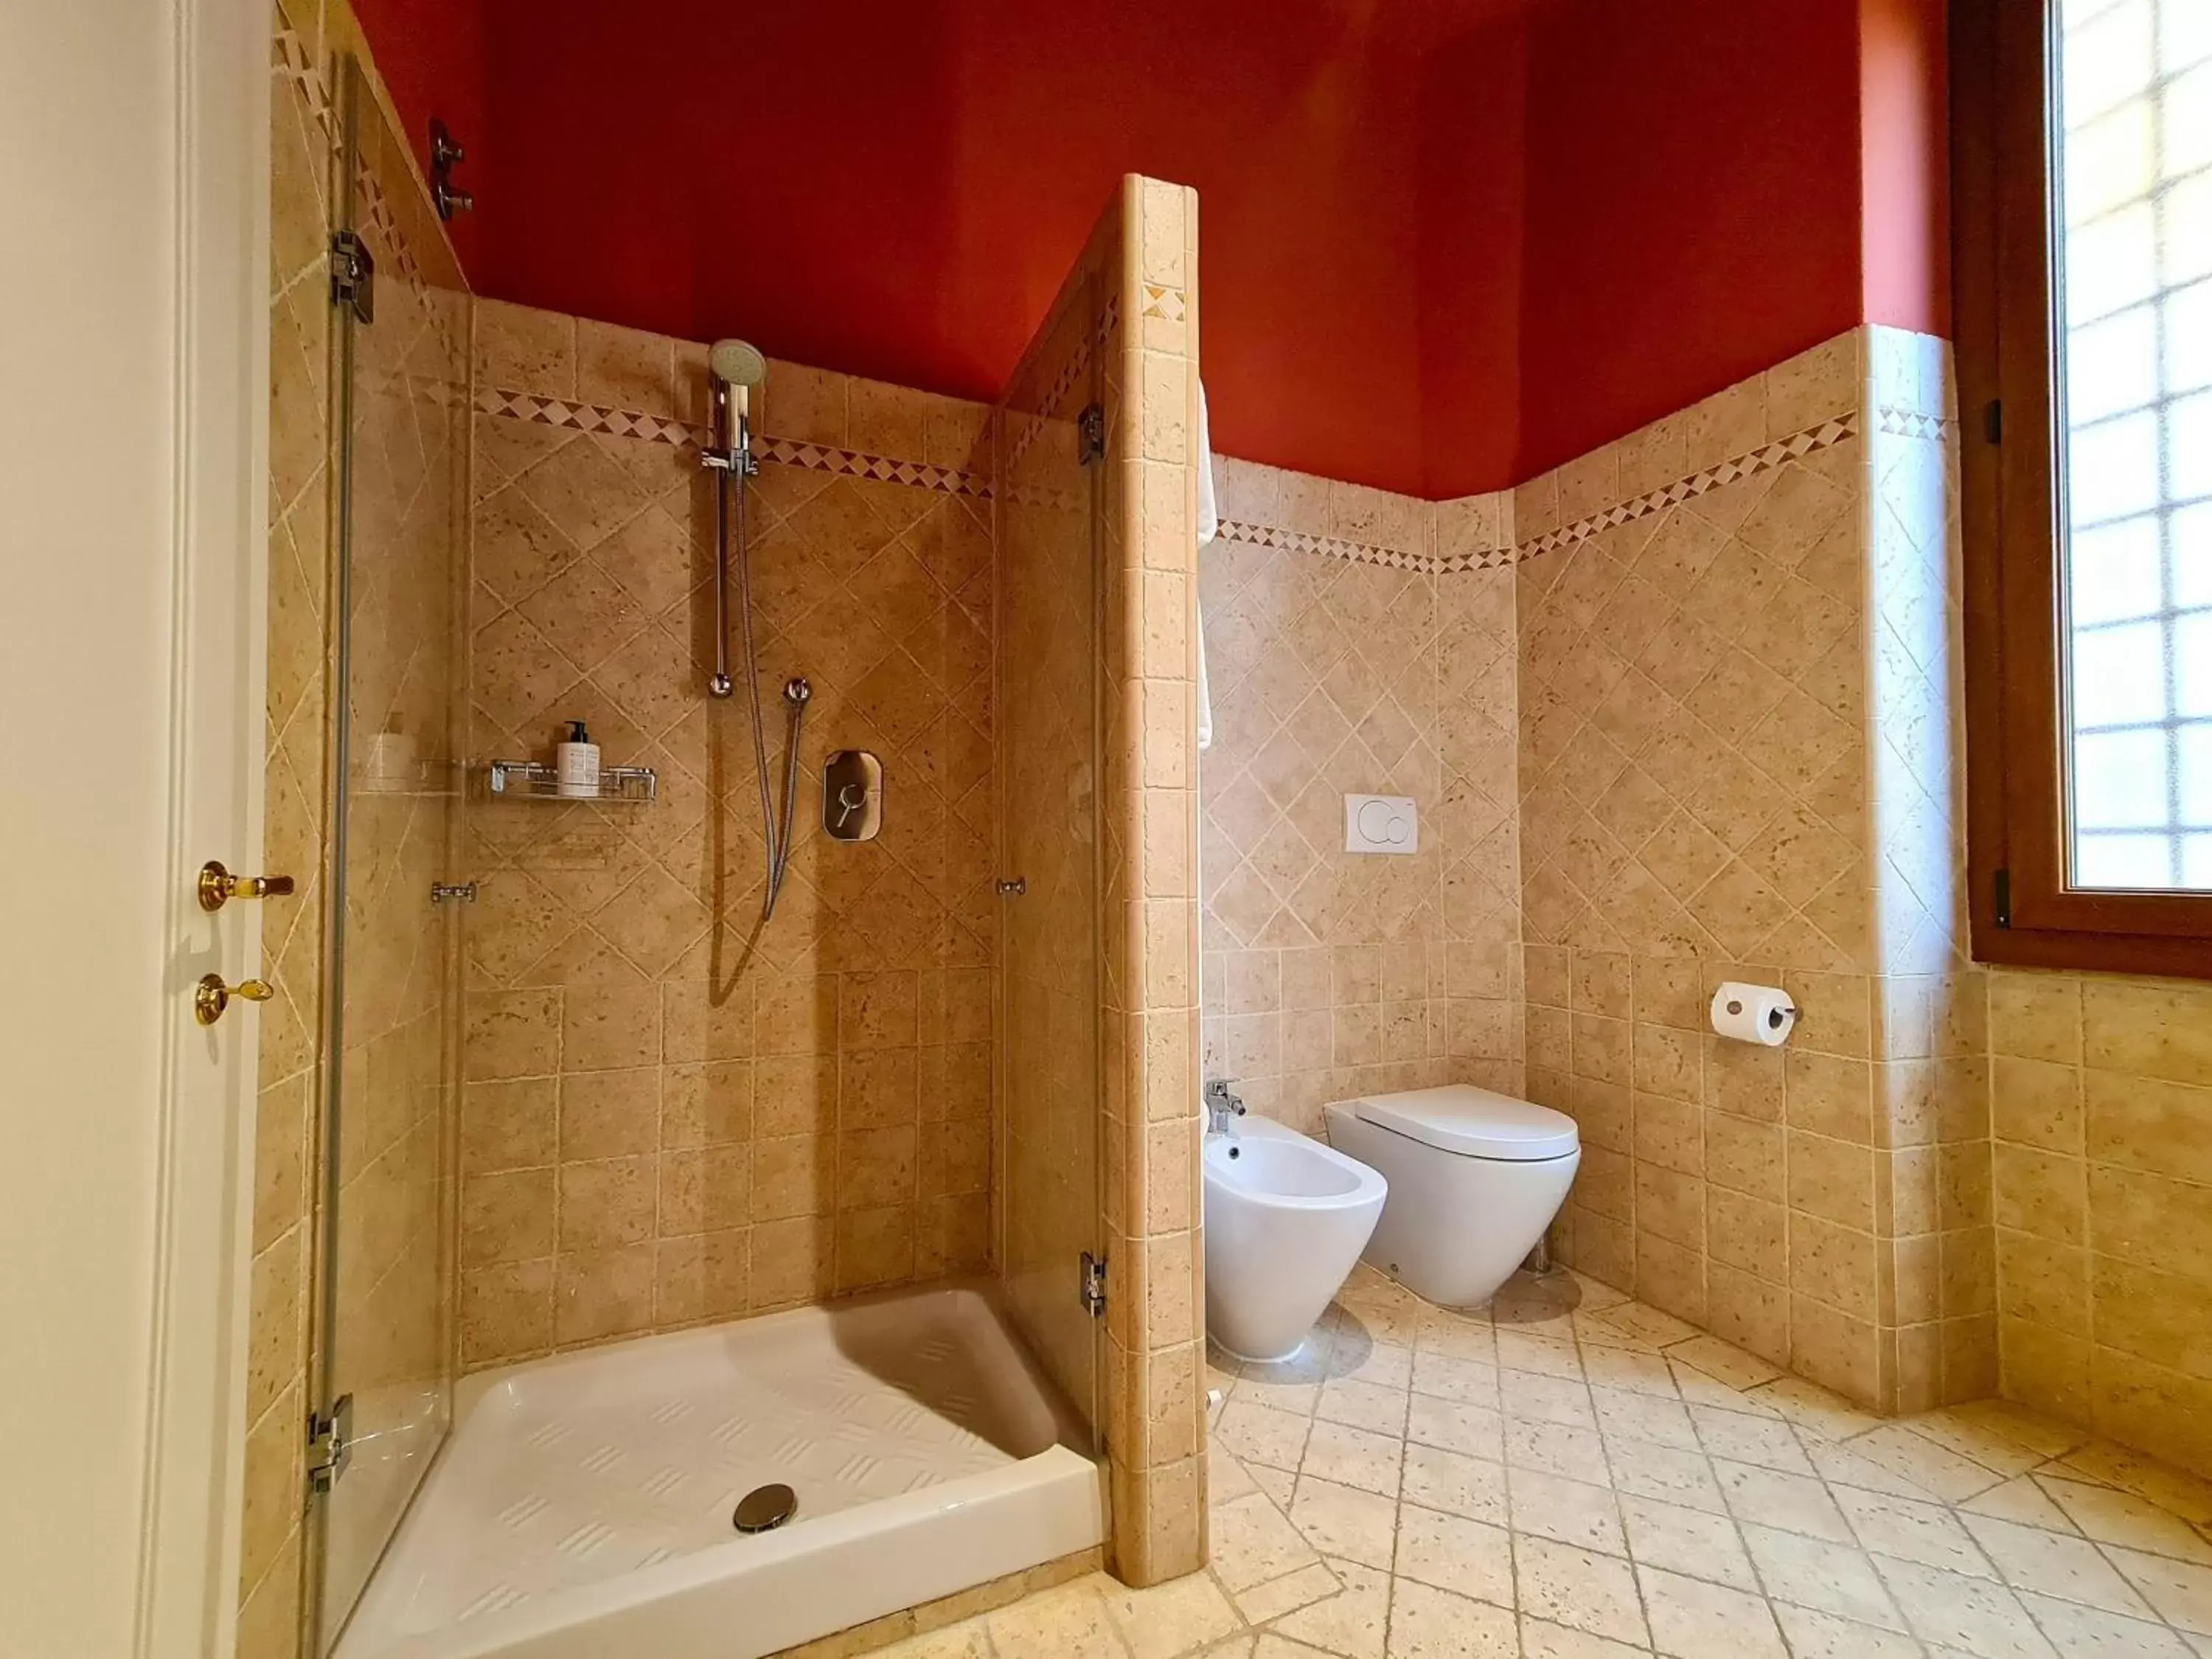 Bathroom in Santa Maria Novella - WTB Hotels